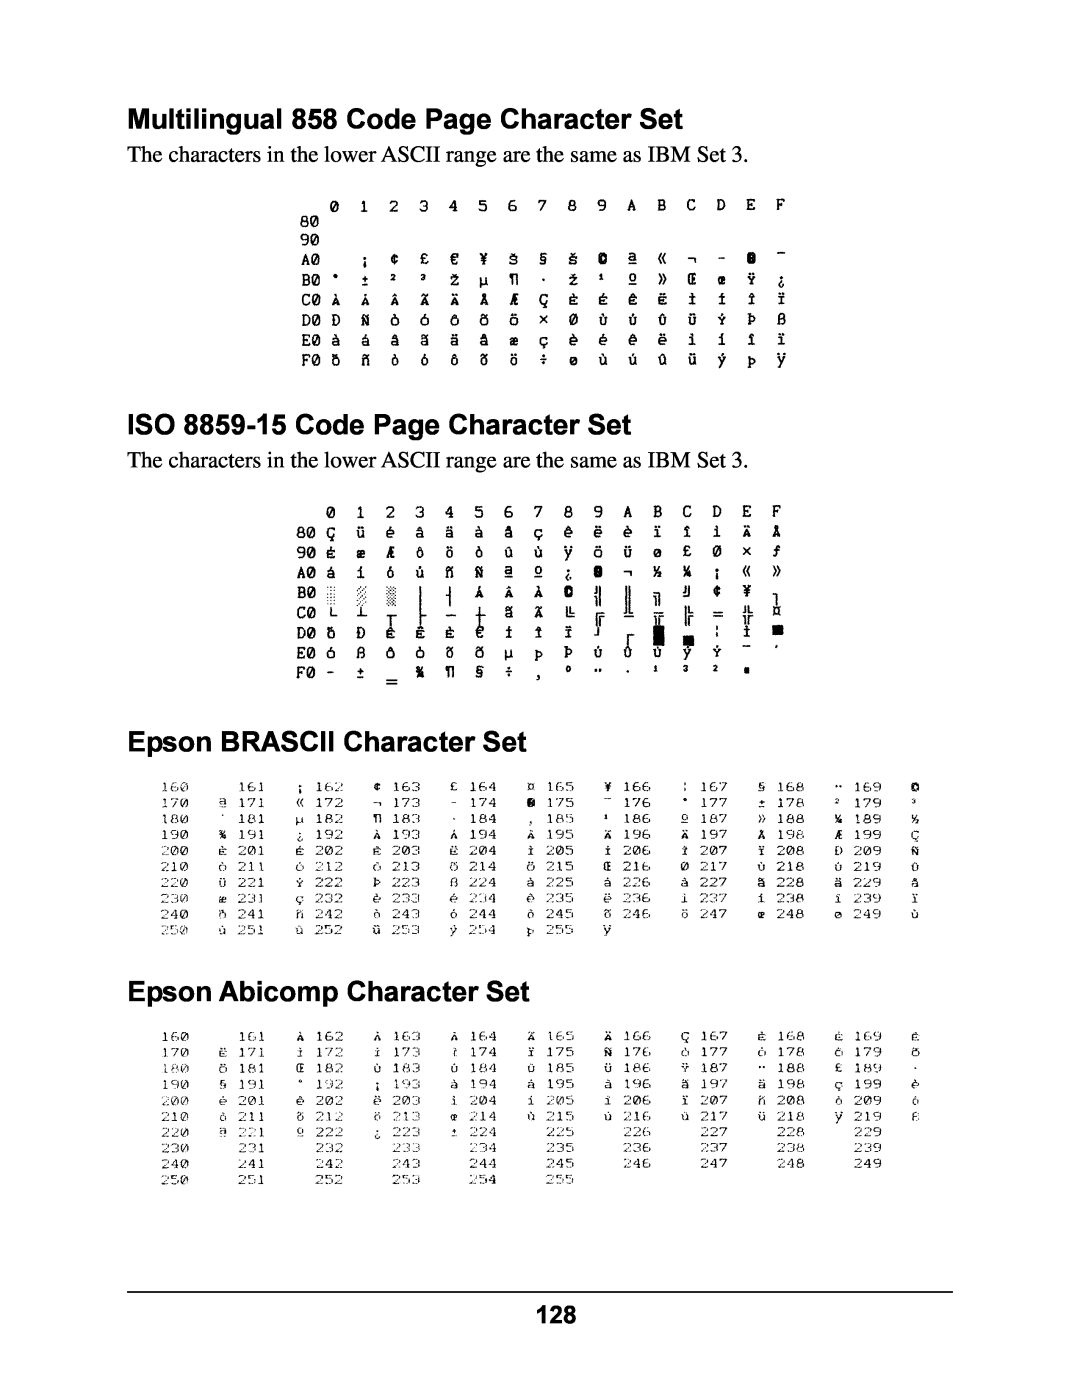 Oki 4410 manual Multilingual 858 Code Page Character Set, ISO 8859-15 Code Page Character Set 